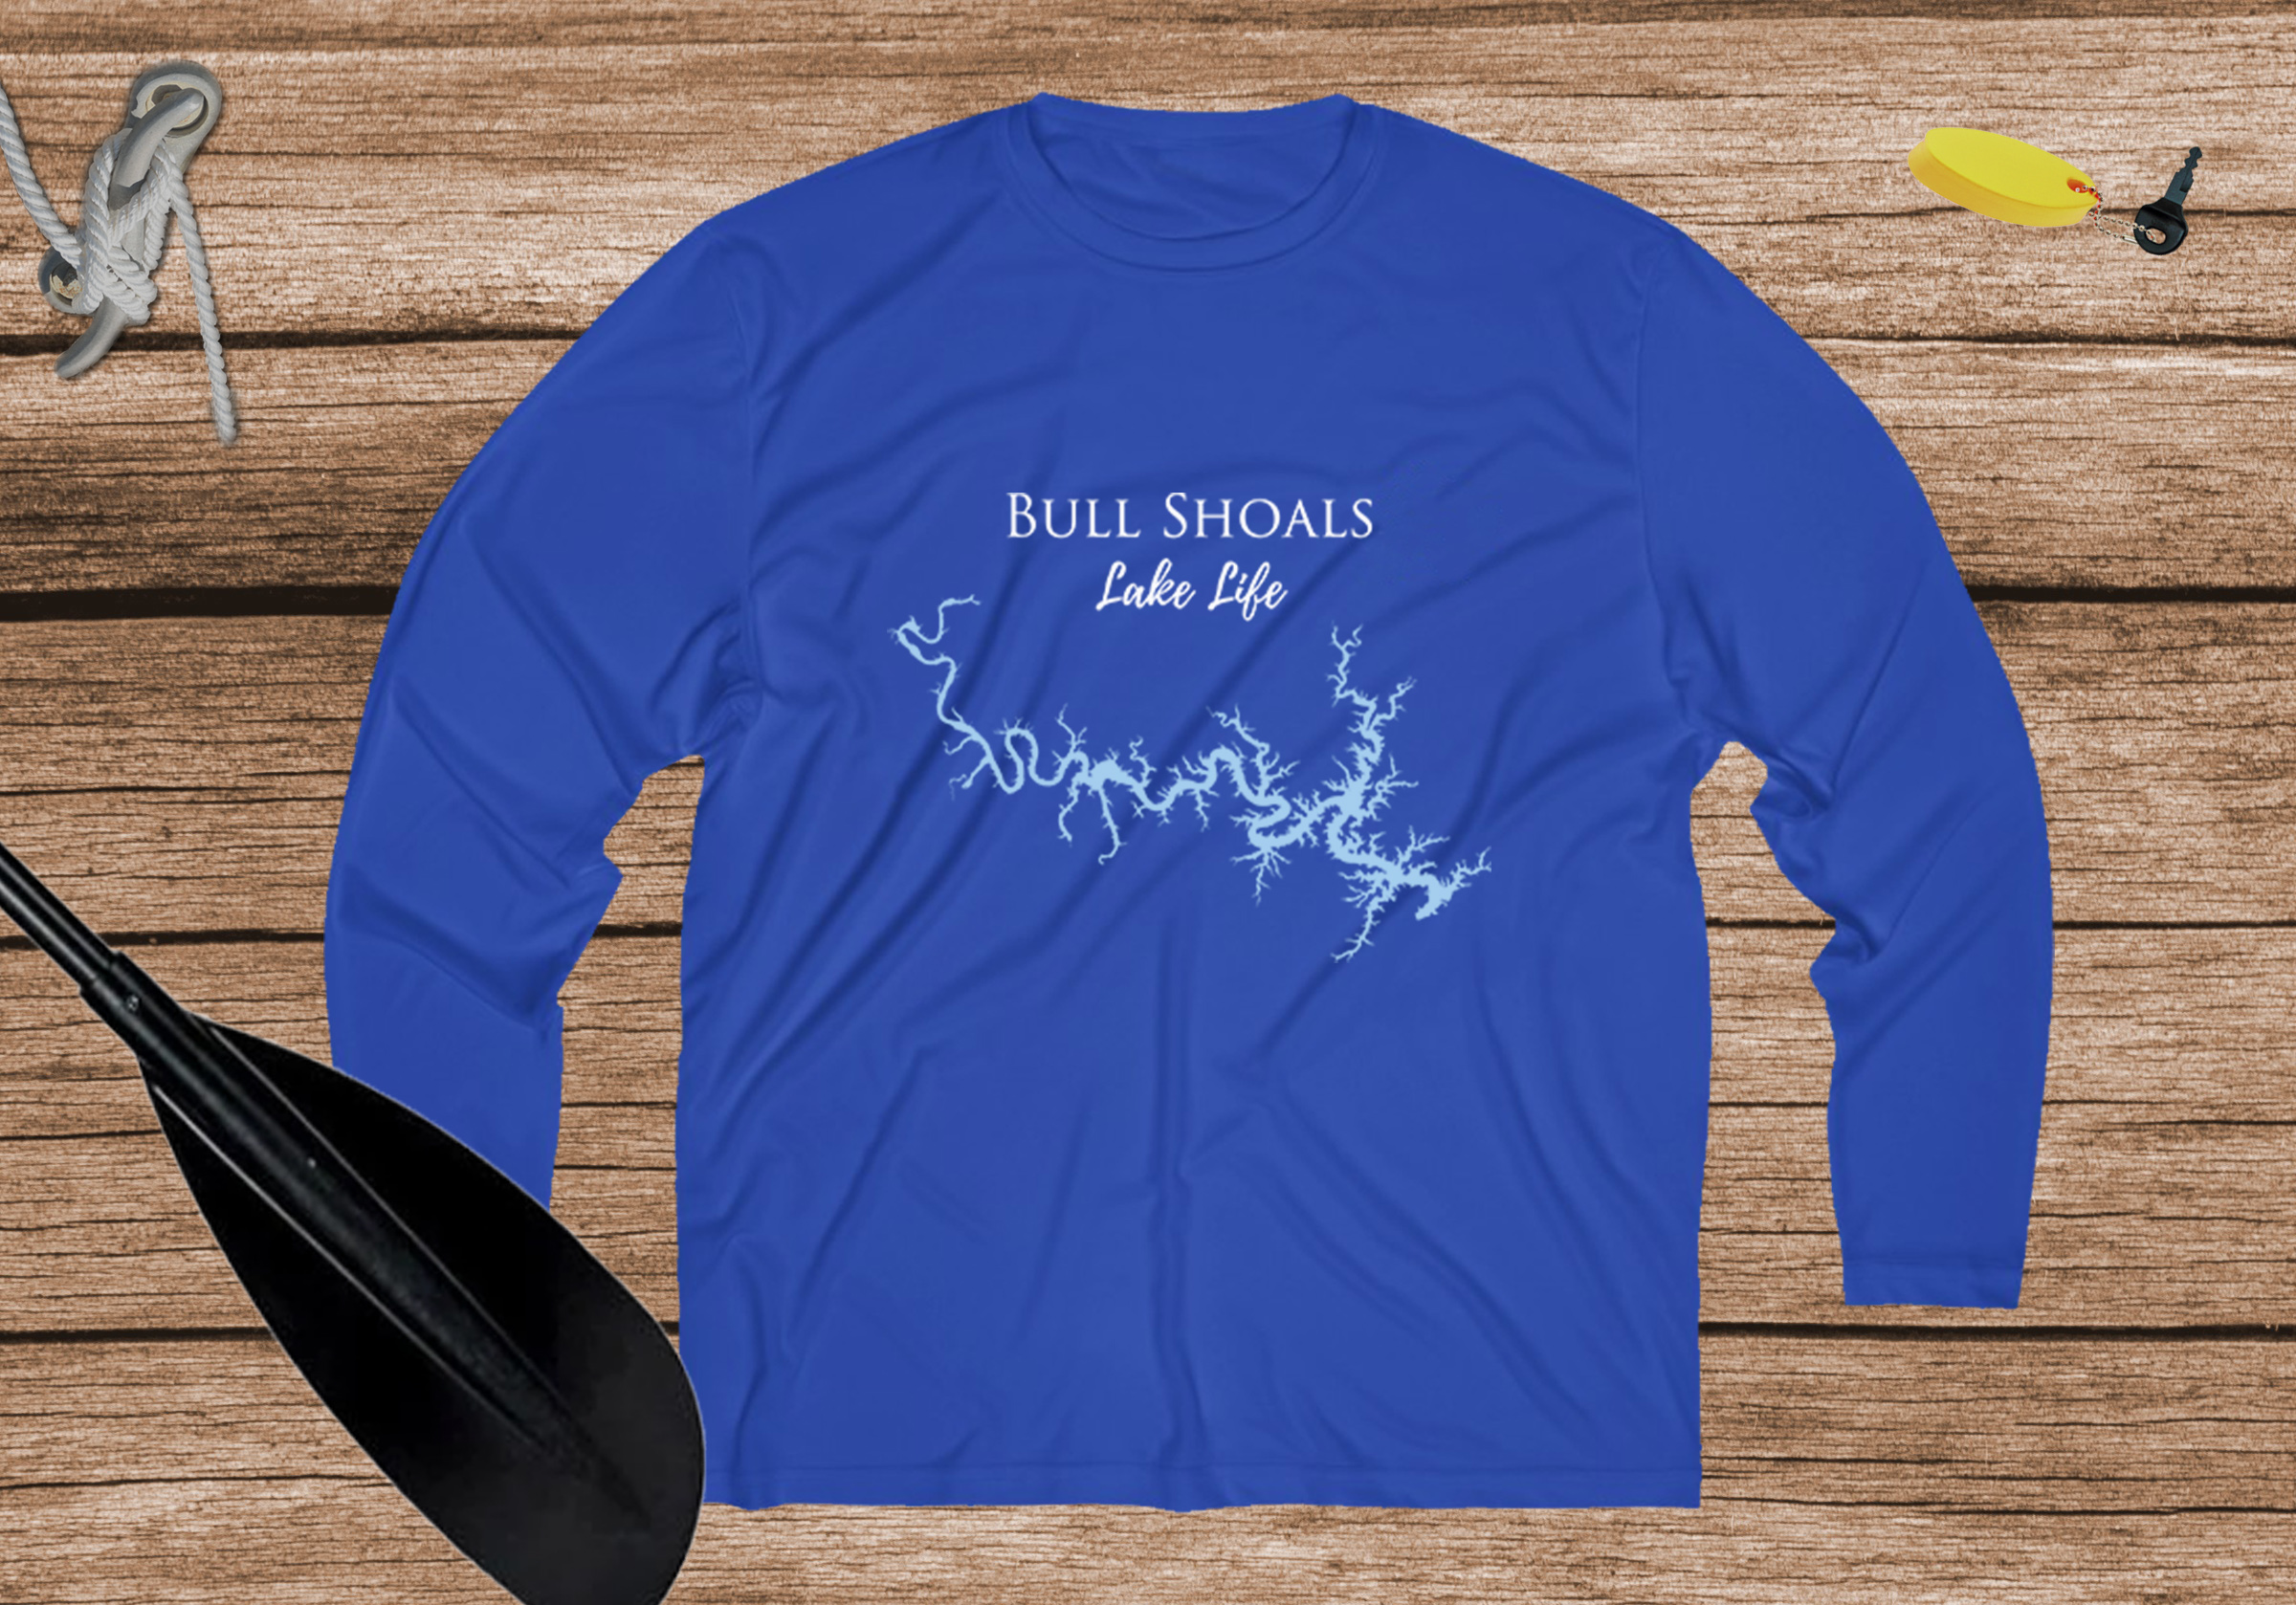 Bull Shoals Lake Life Dri-fit Boating Shirt - Breathable Material- Men's Long Sleeve Moisture Wicking Tee - Arkansas Lake